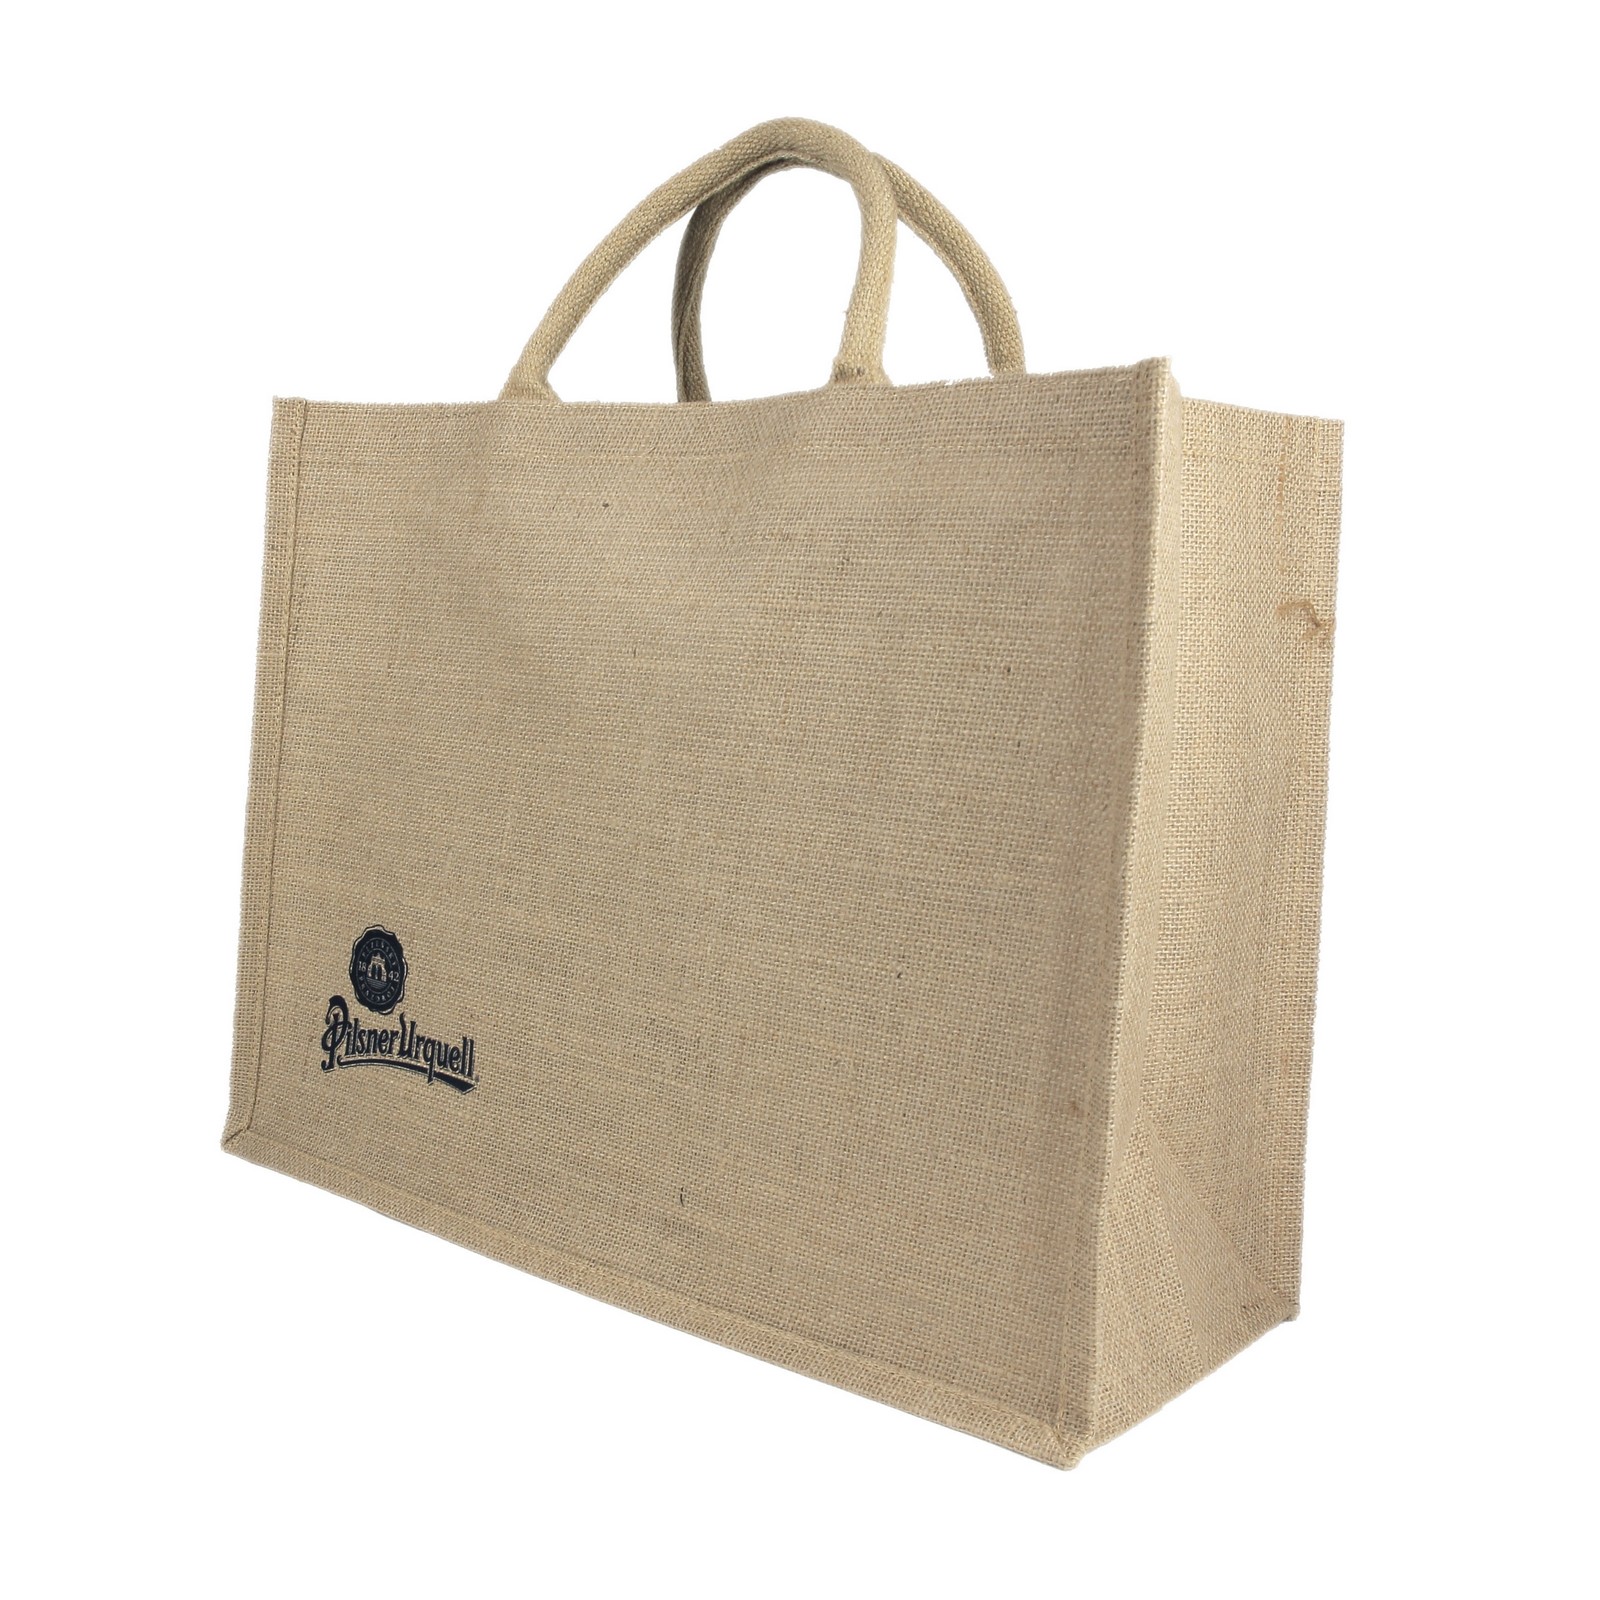 Pilsner Urquell jute bag for gifts